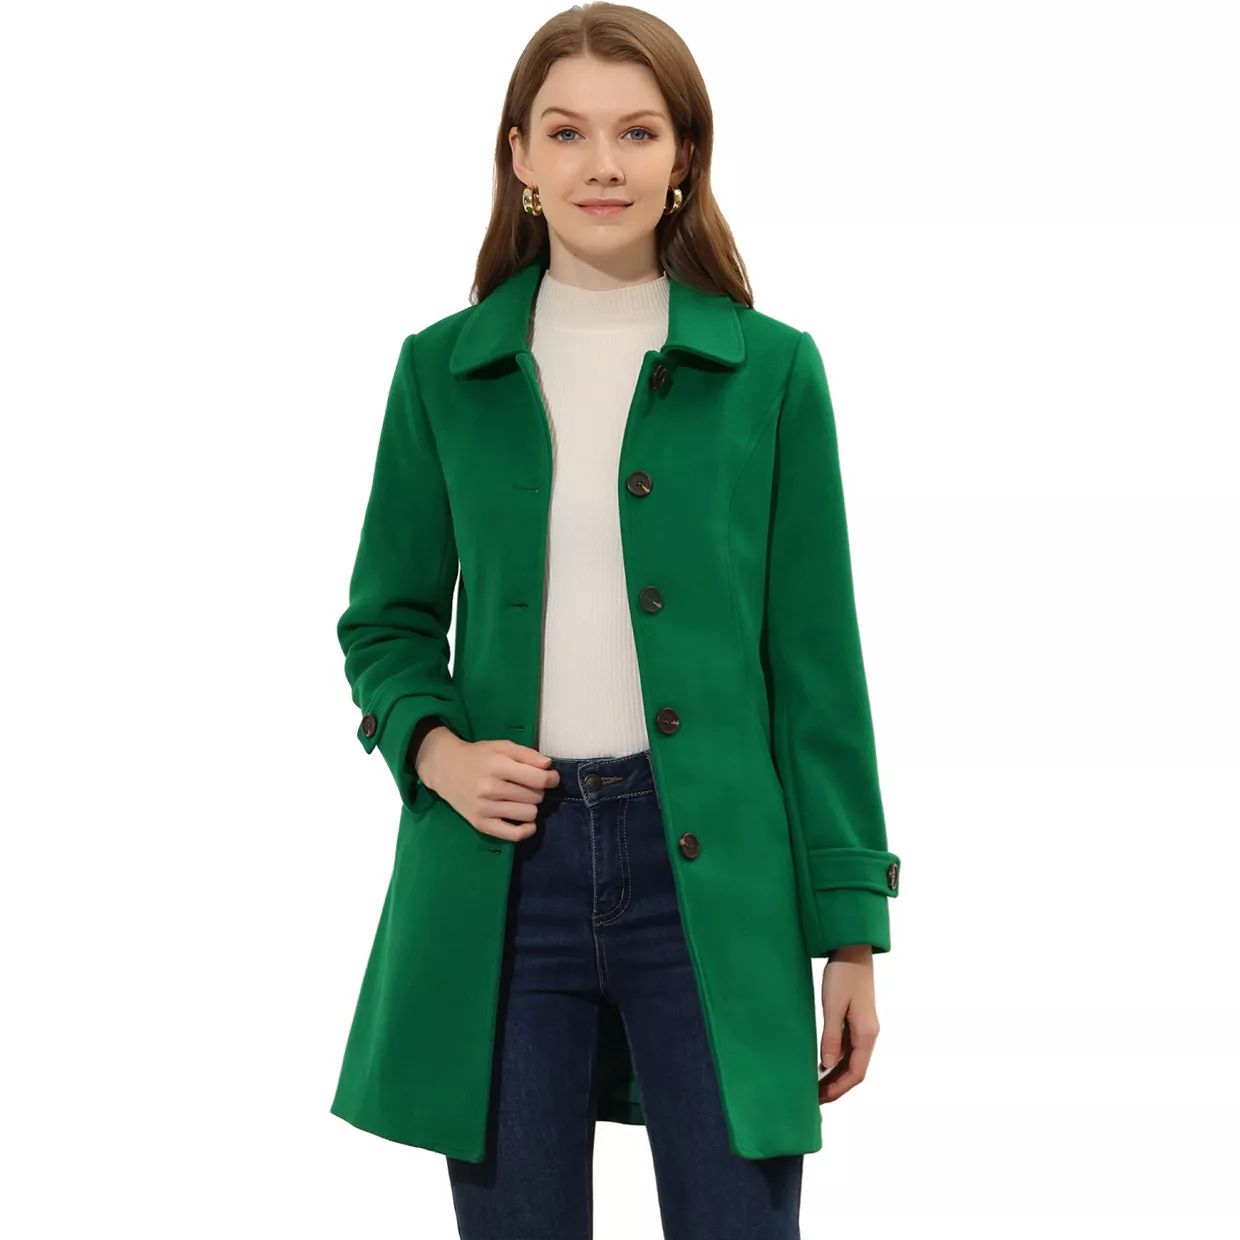 Women's Peter Pan Collar Winter Outwear Trench Coats | Kohl's